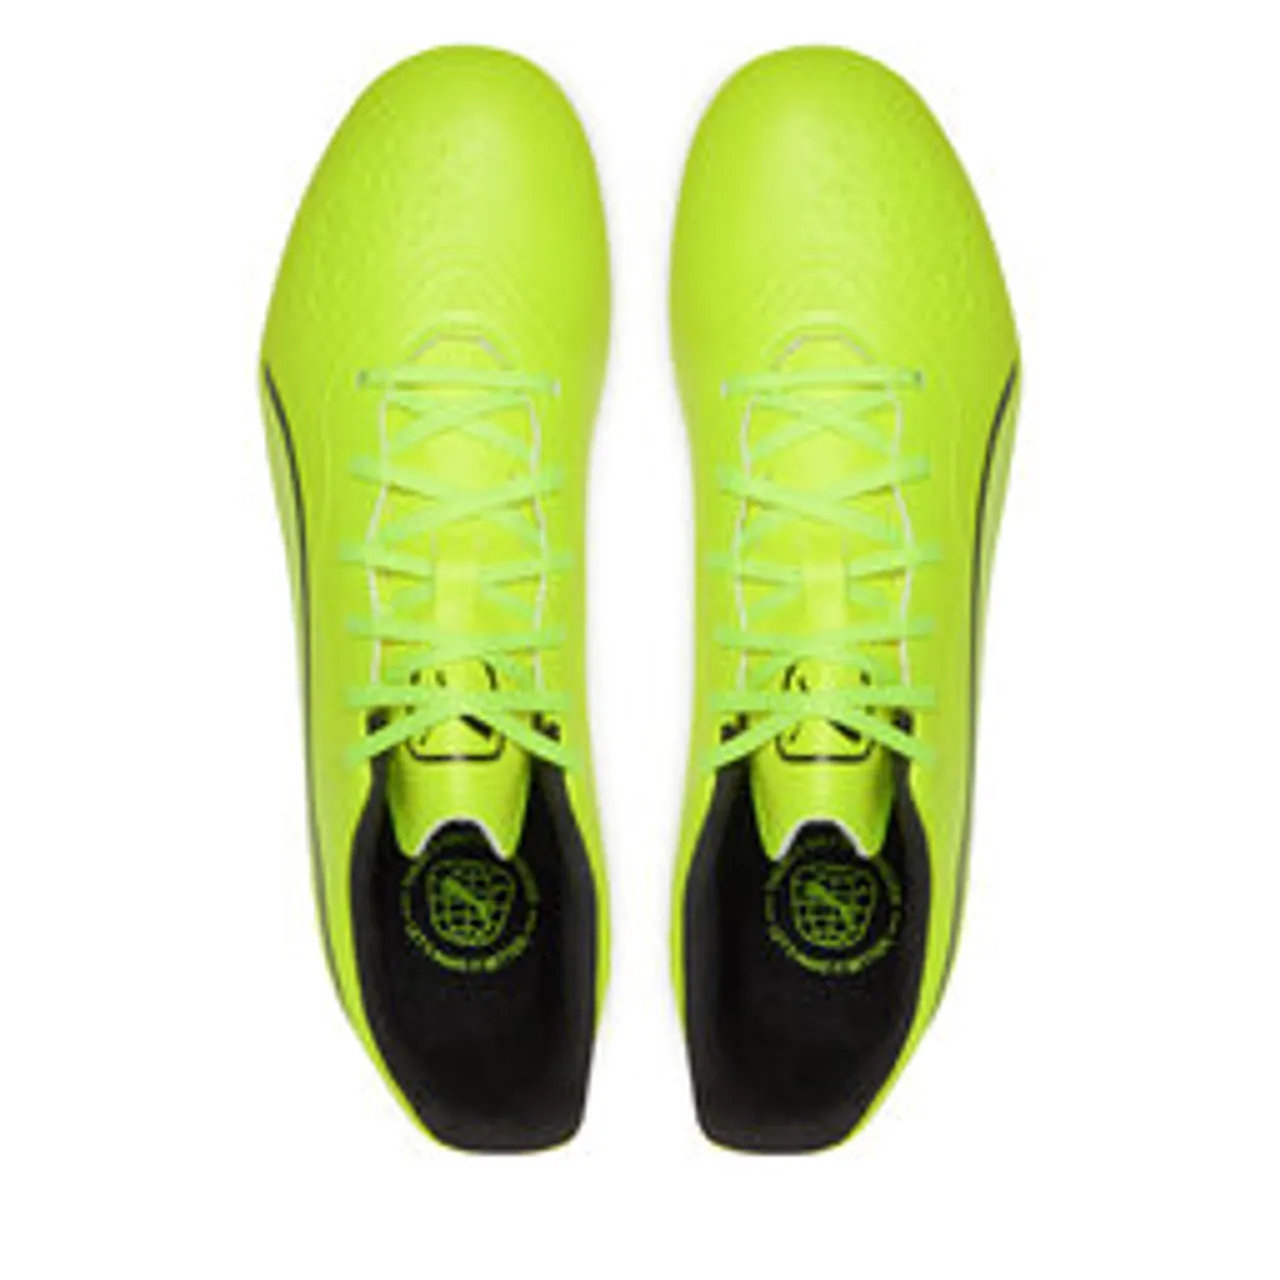 Schuhe Puma King Match Fg/Ag 107570 04 Electric Lime/Puma Black